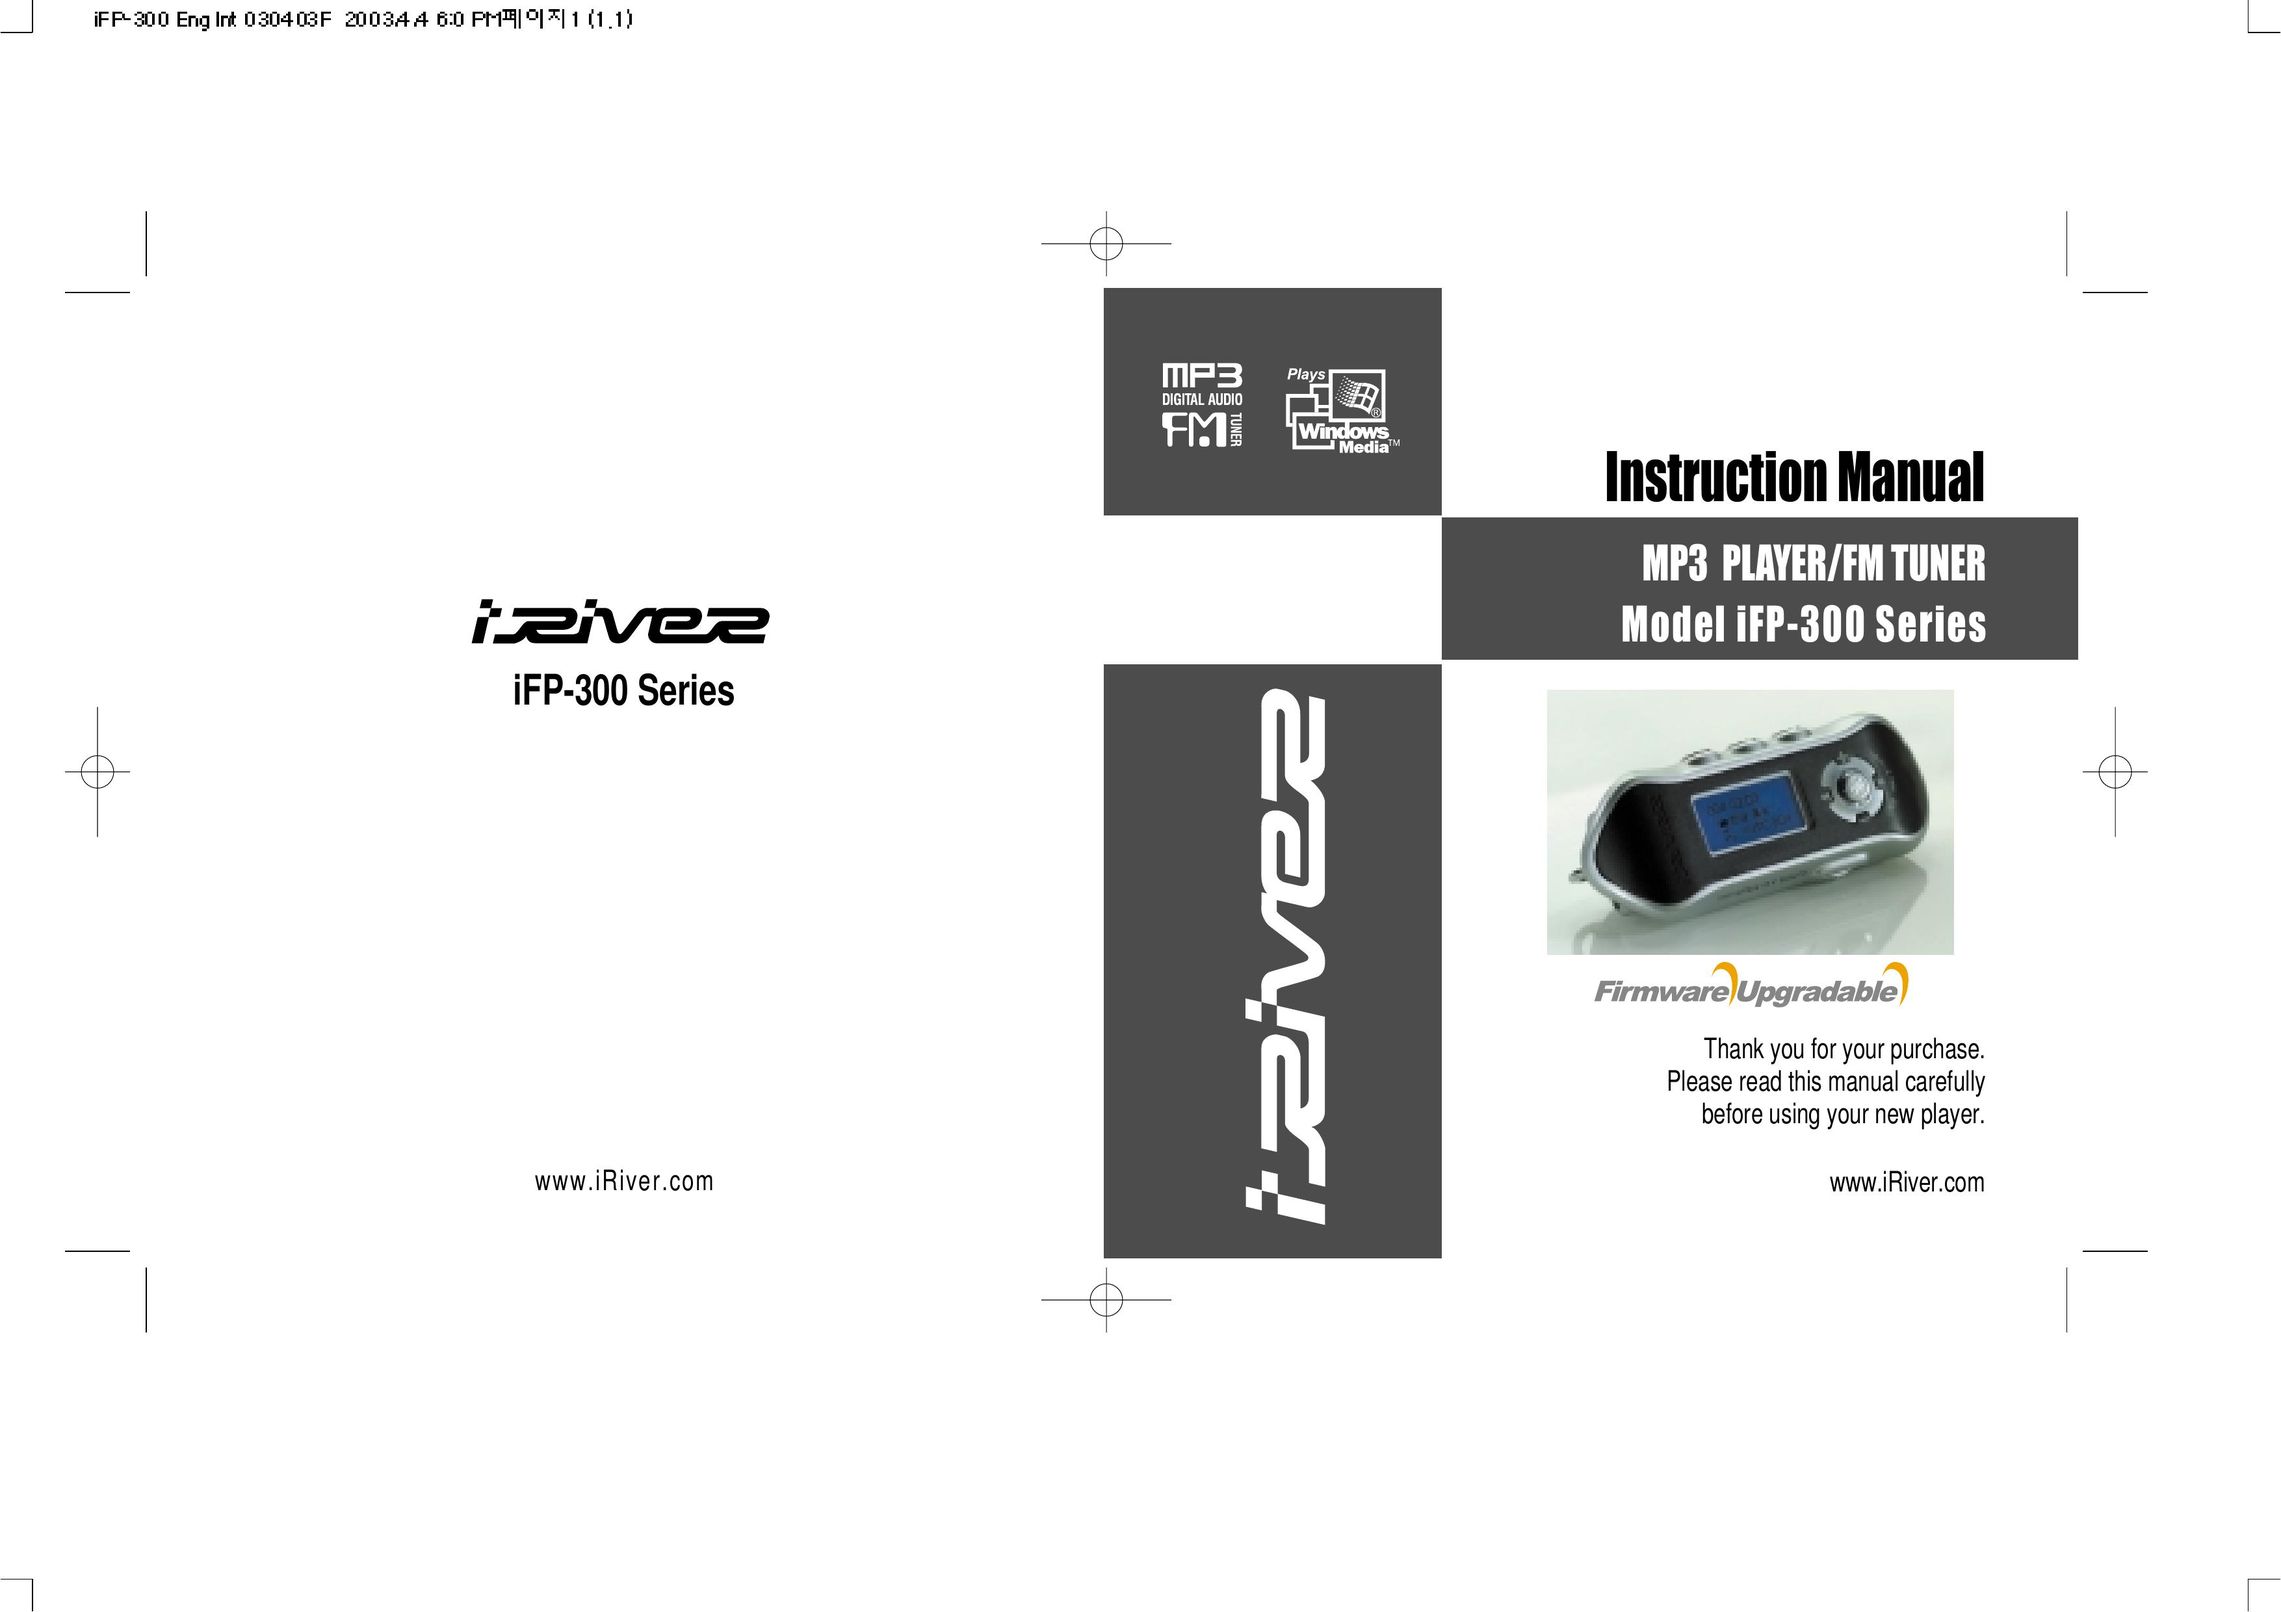 IRiver iFP-300 Series MP3 Player User Manual